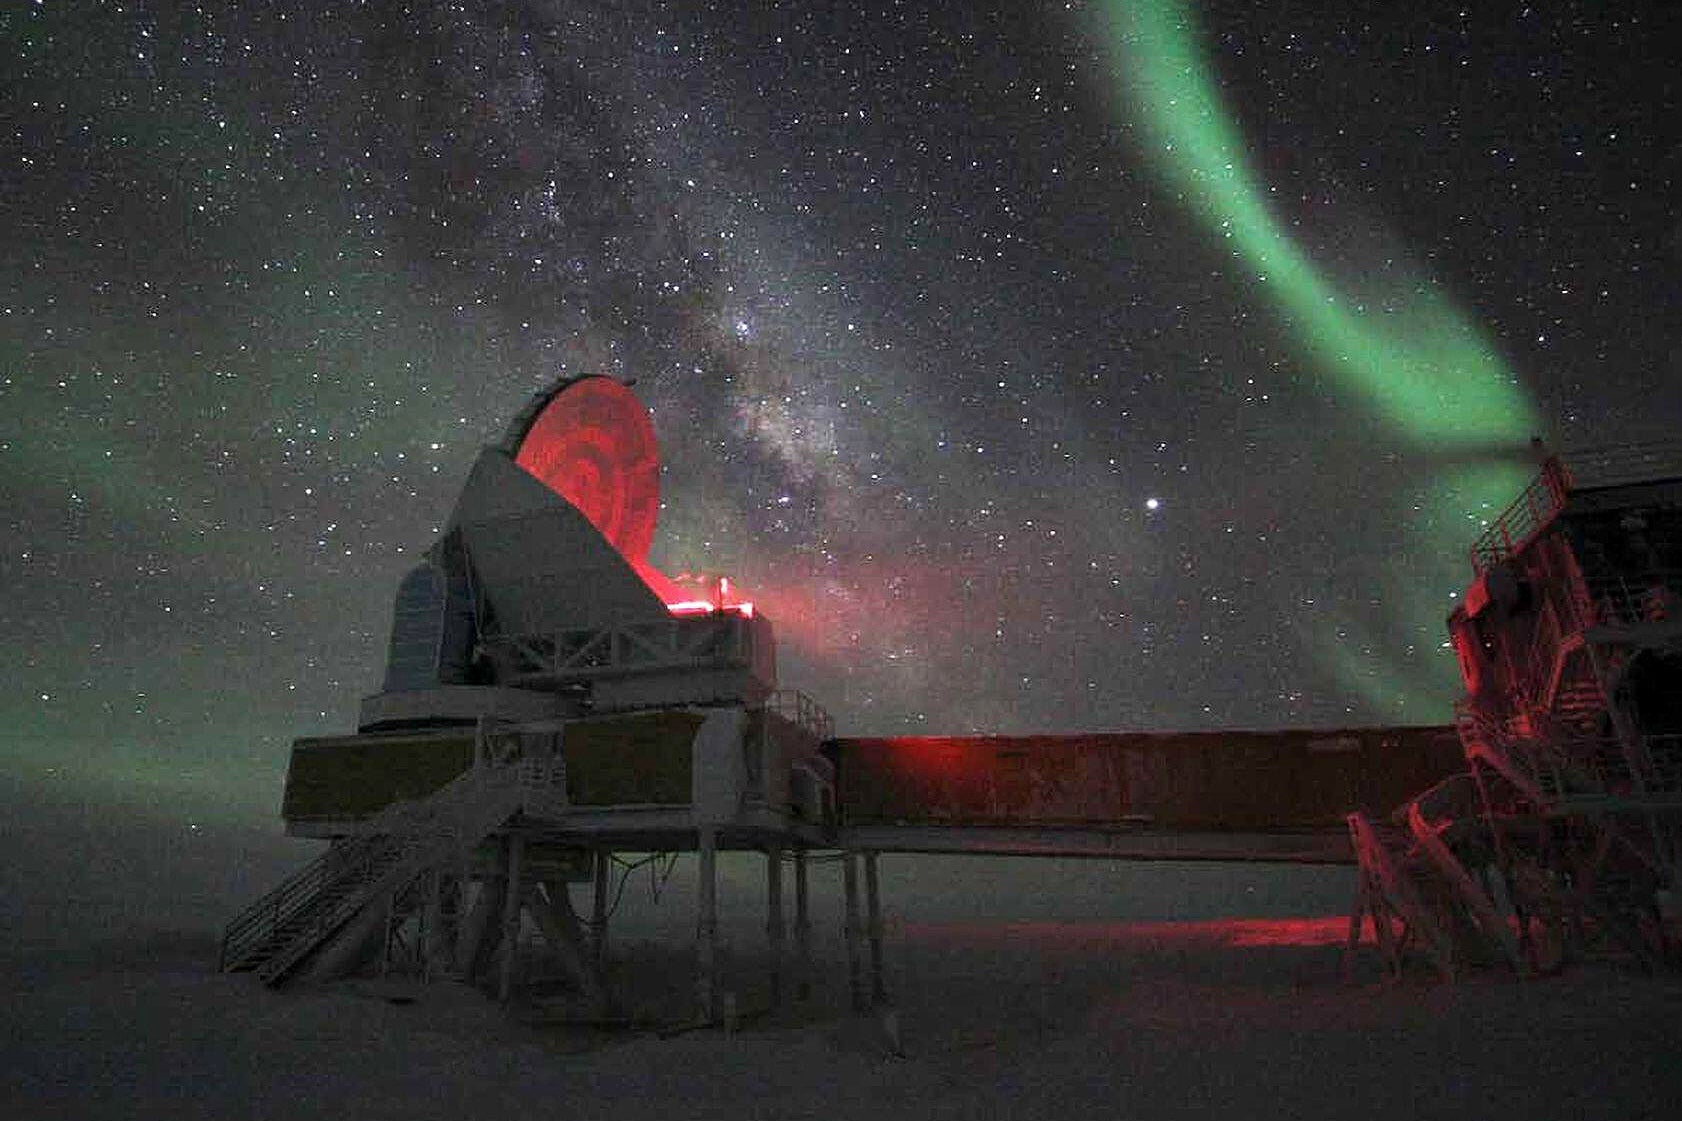 South pole telescope at night